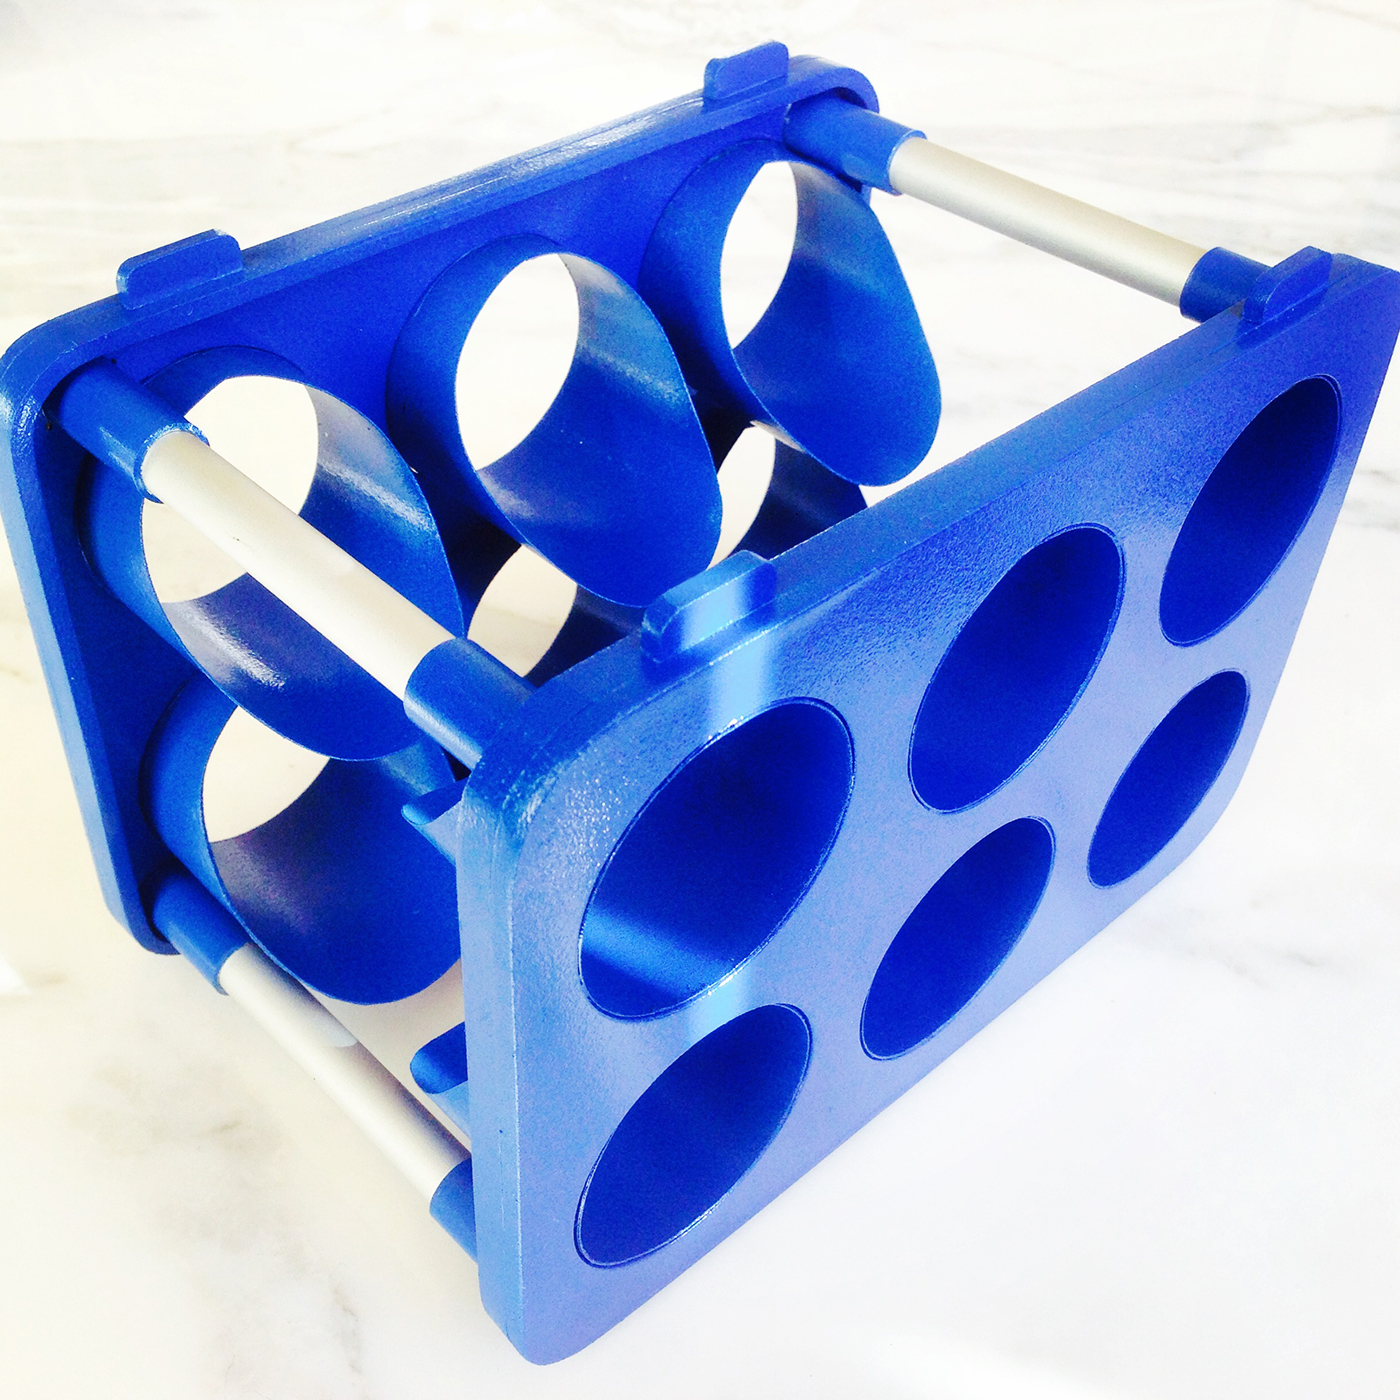 blue bottle wine kitchen Jasper Morrison  plastic alluminium magis design handcraft